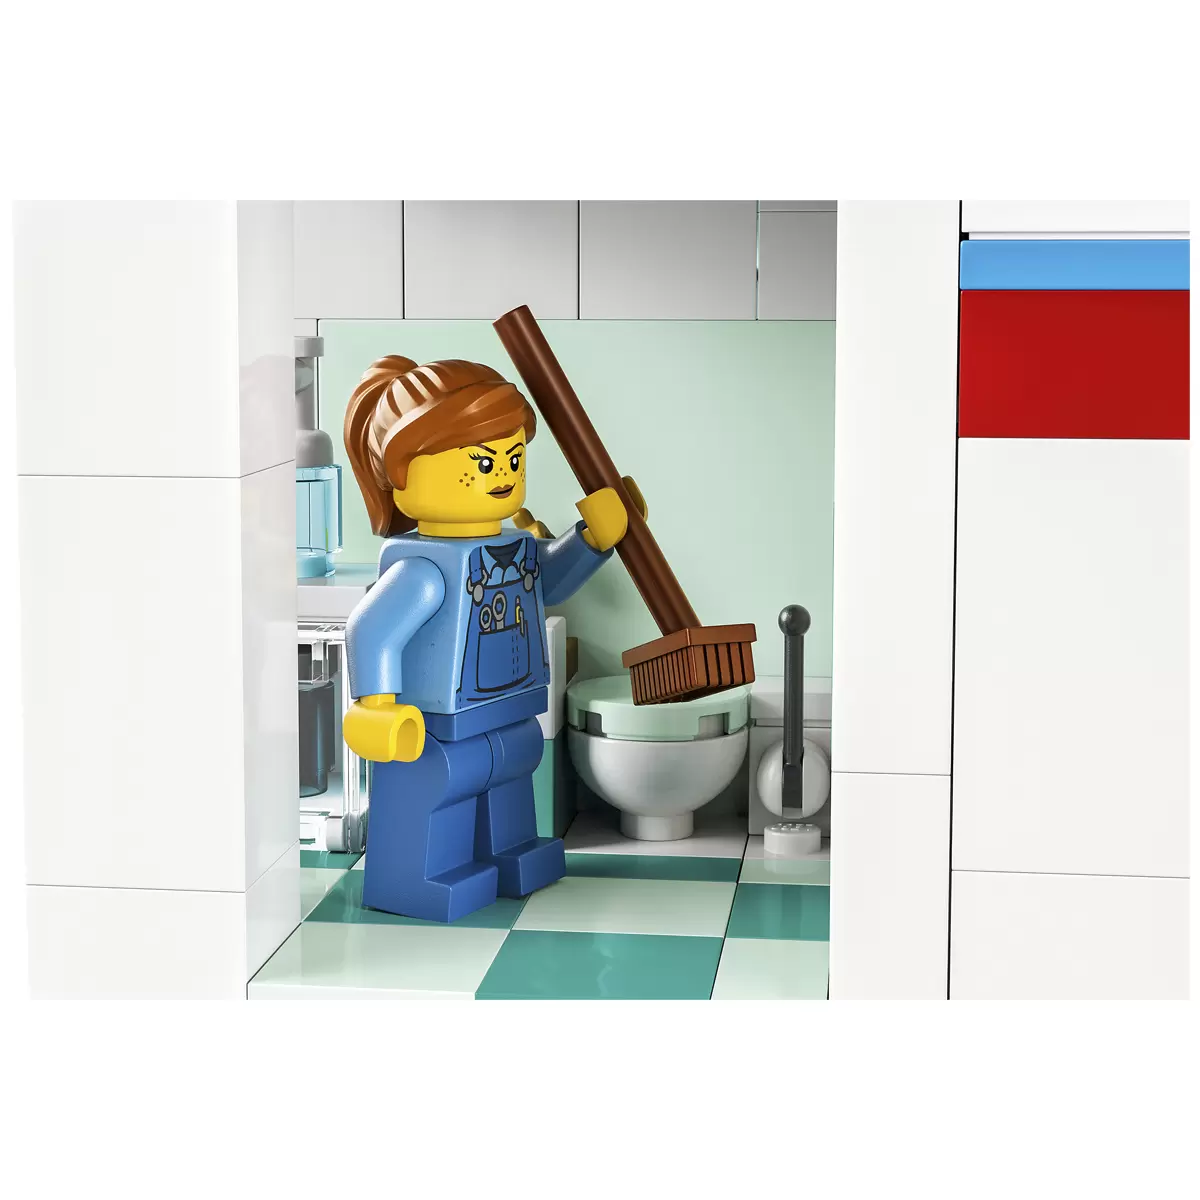 LEGO City Hospital 60330